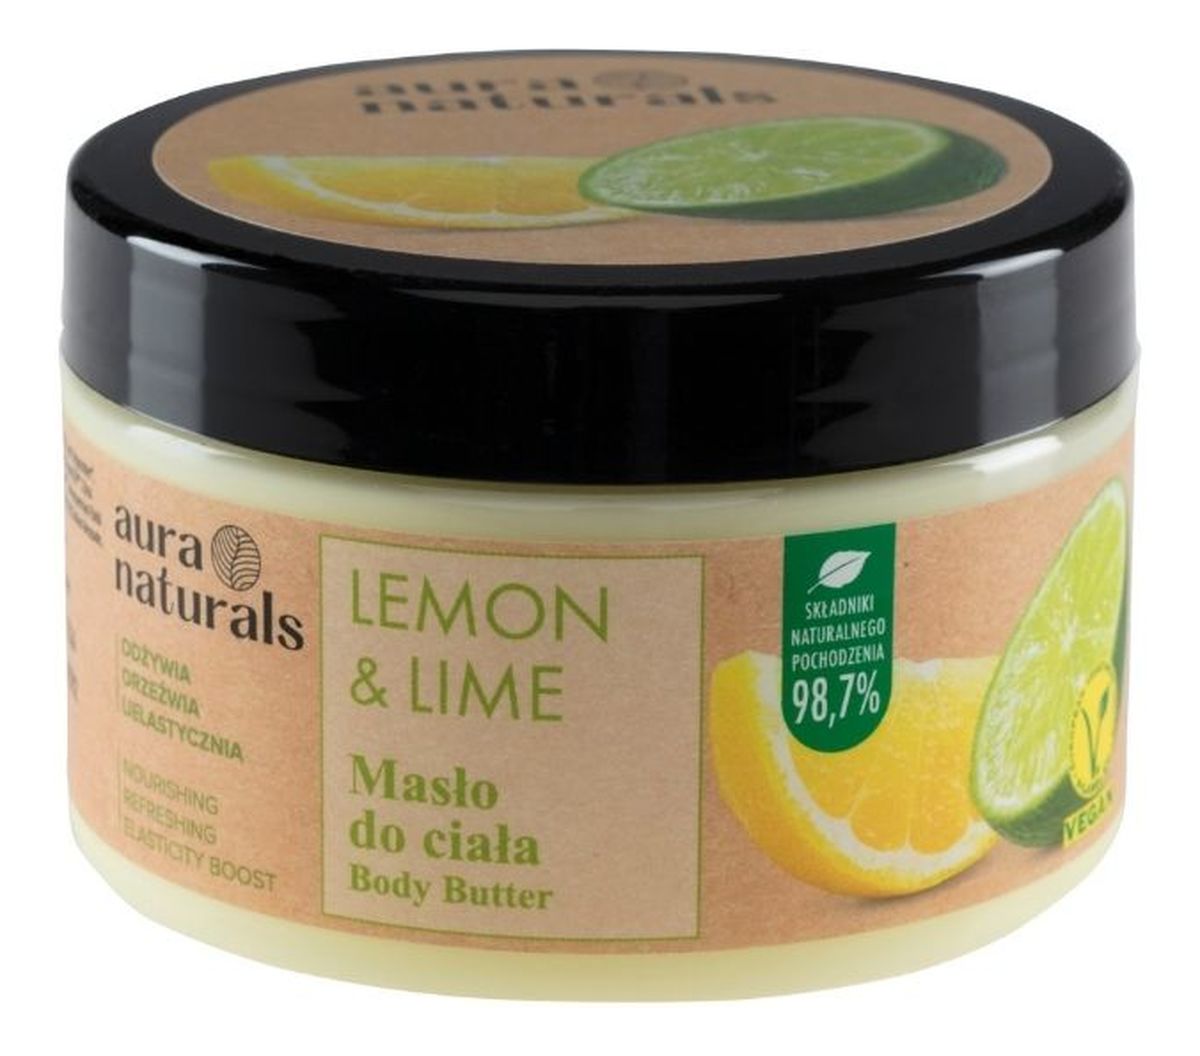 Lemon & Lime Masło do ciała